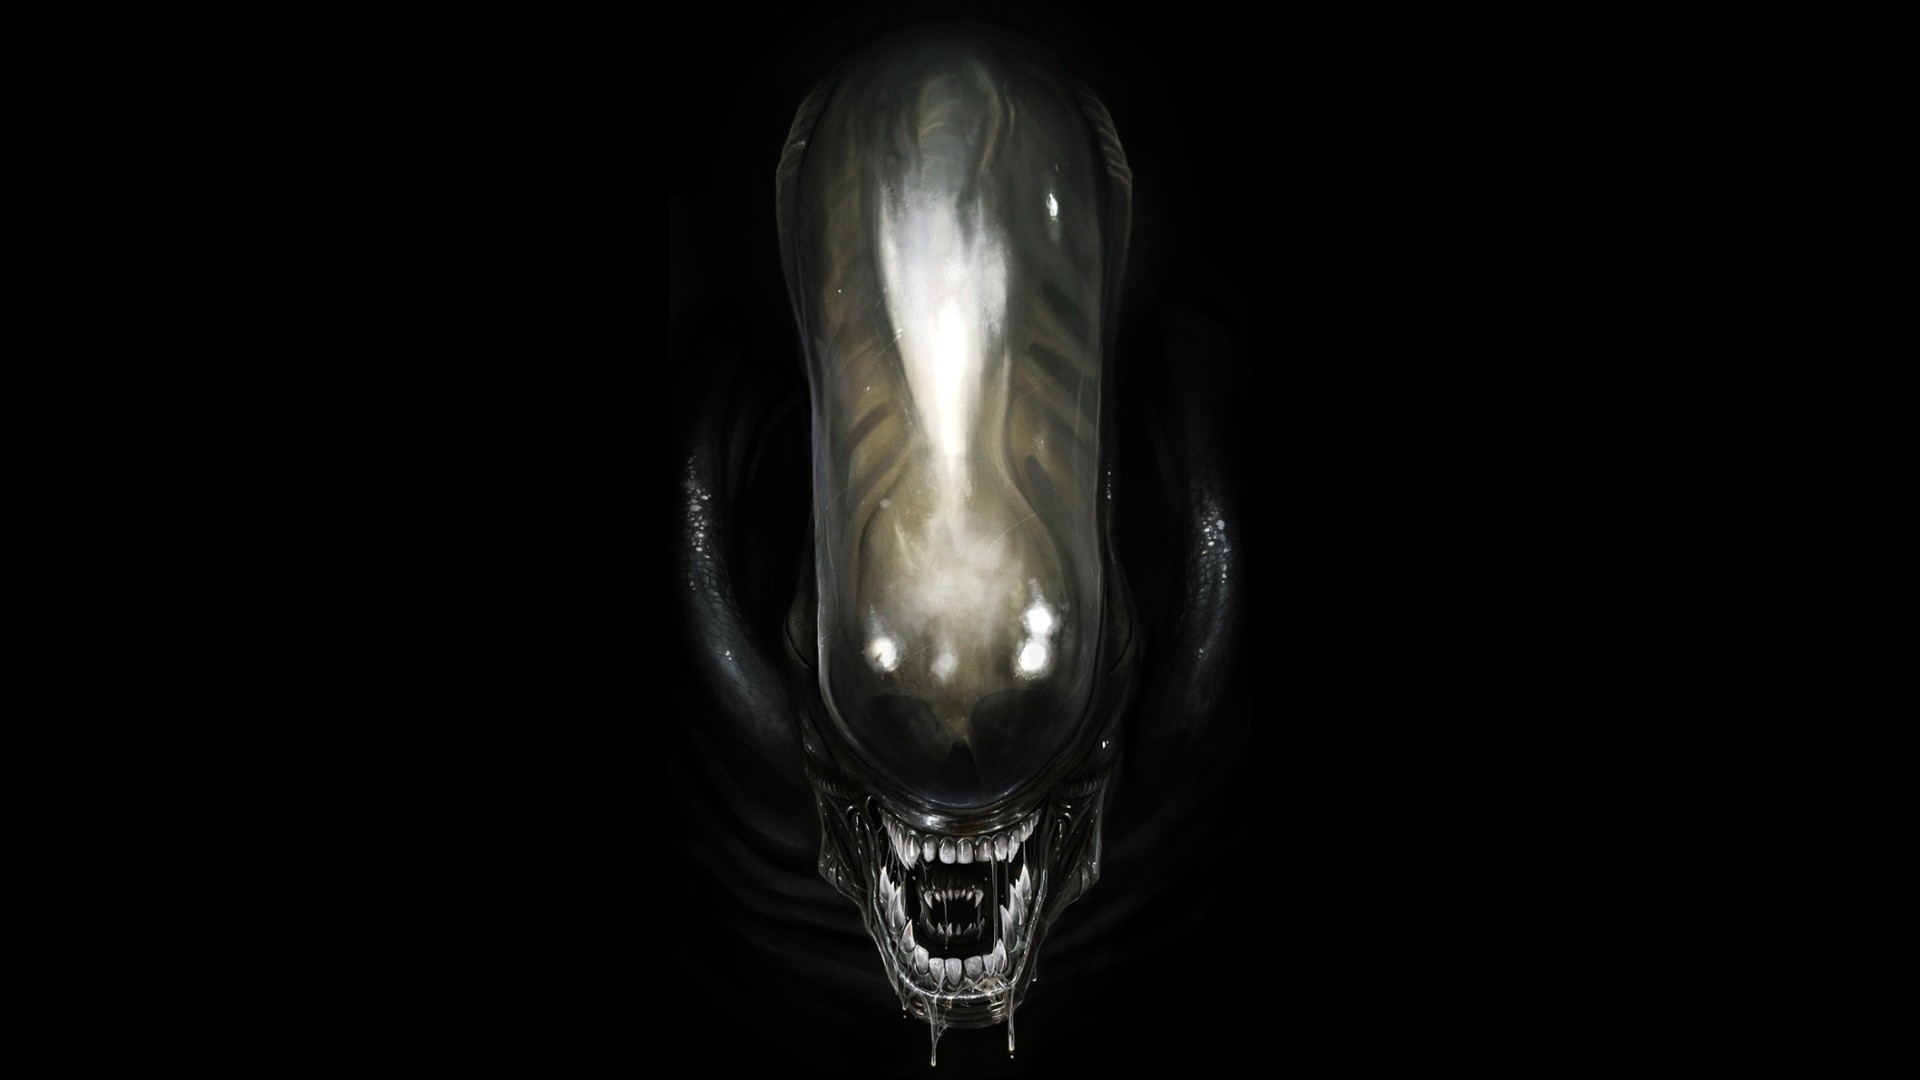 General 1920x1080 aliens Xenomorph artwork Alien (Creature) science fiction horror simple background black background creature movie characters